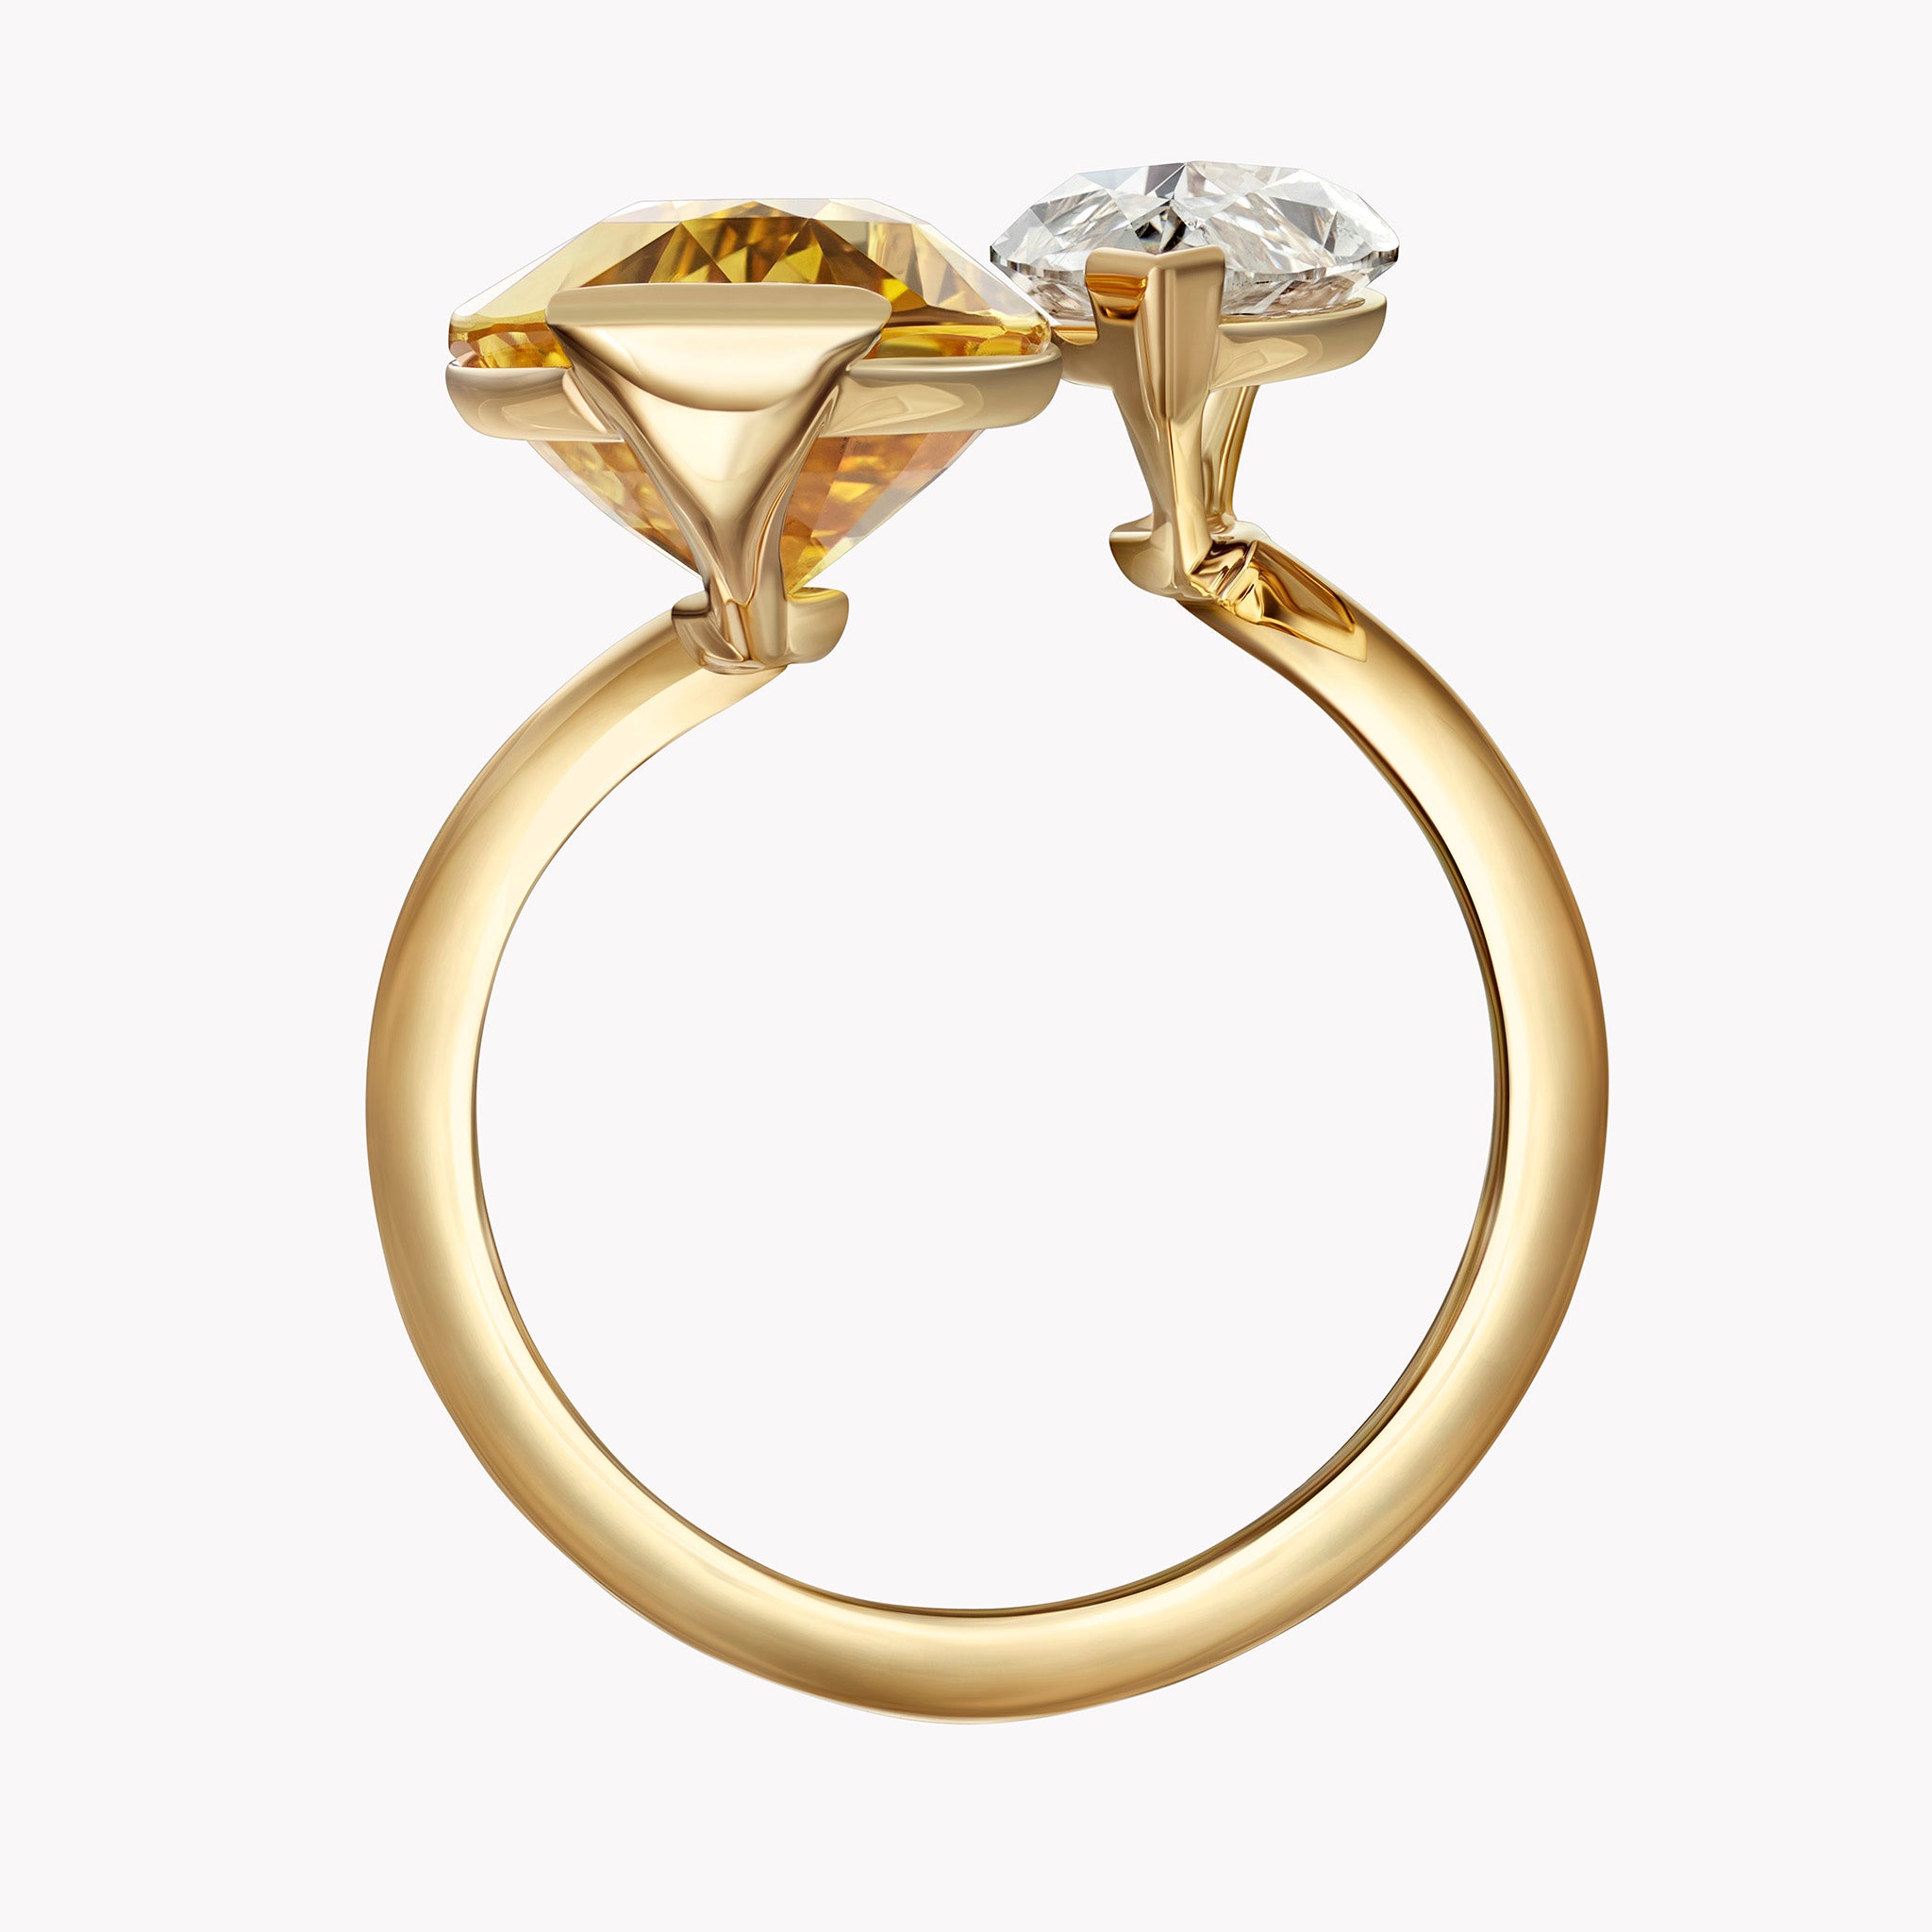 The Daphne Orange-Yellow Sapphire & Diamond Ring